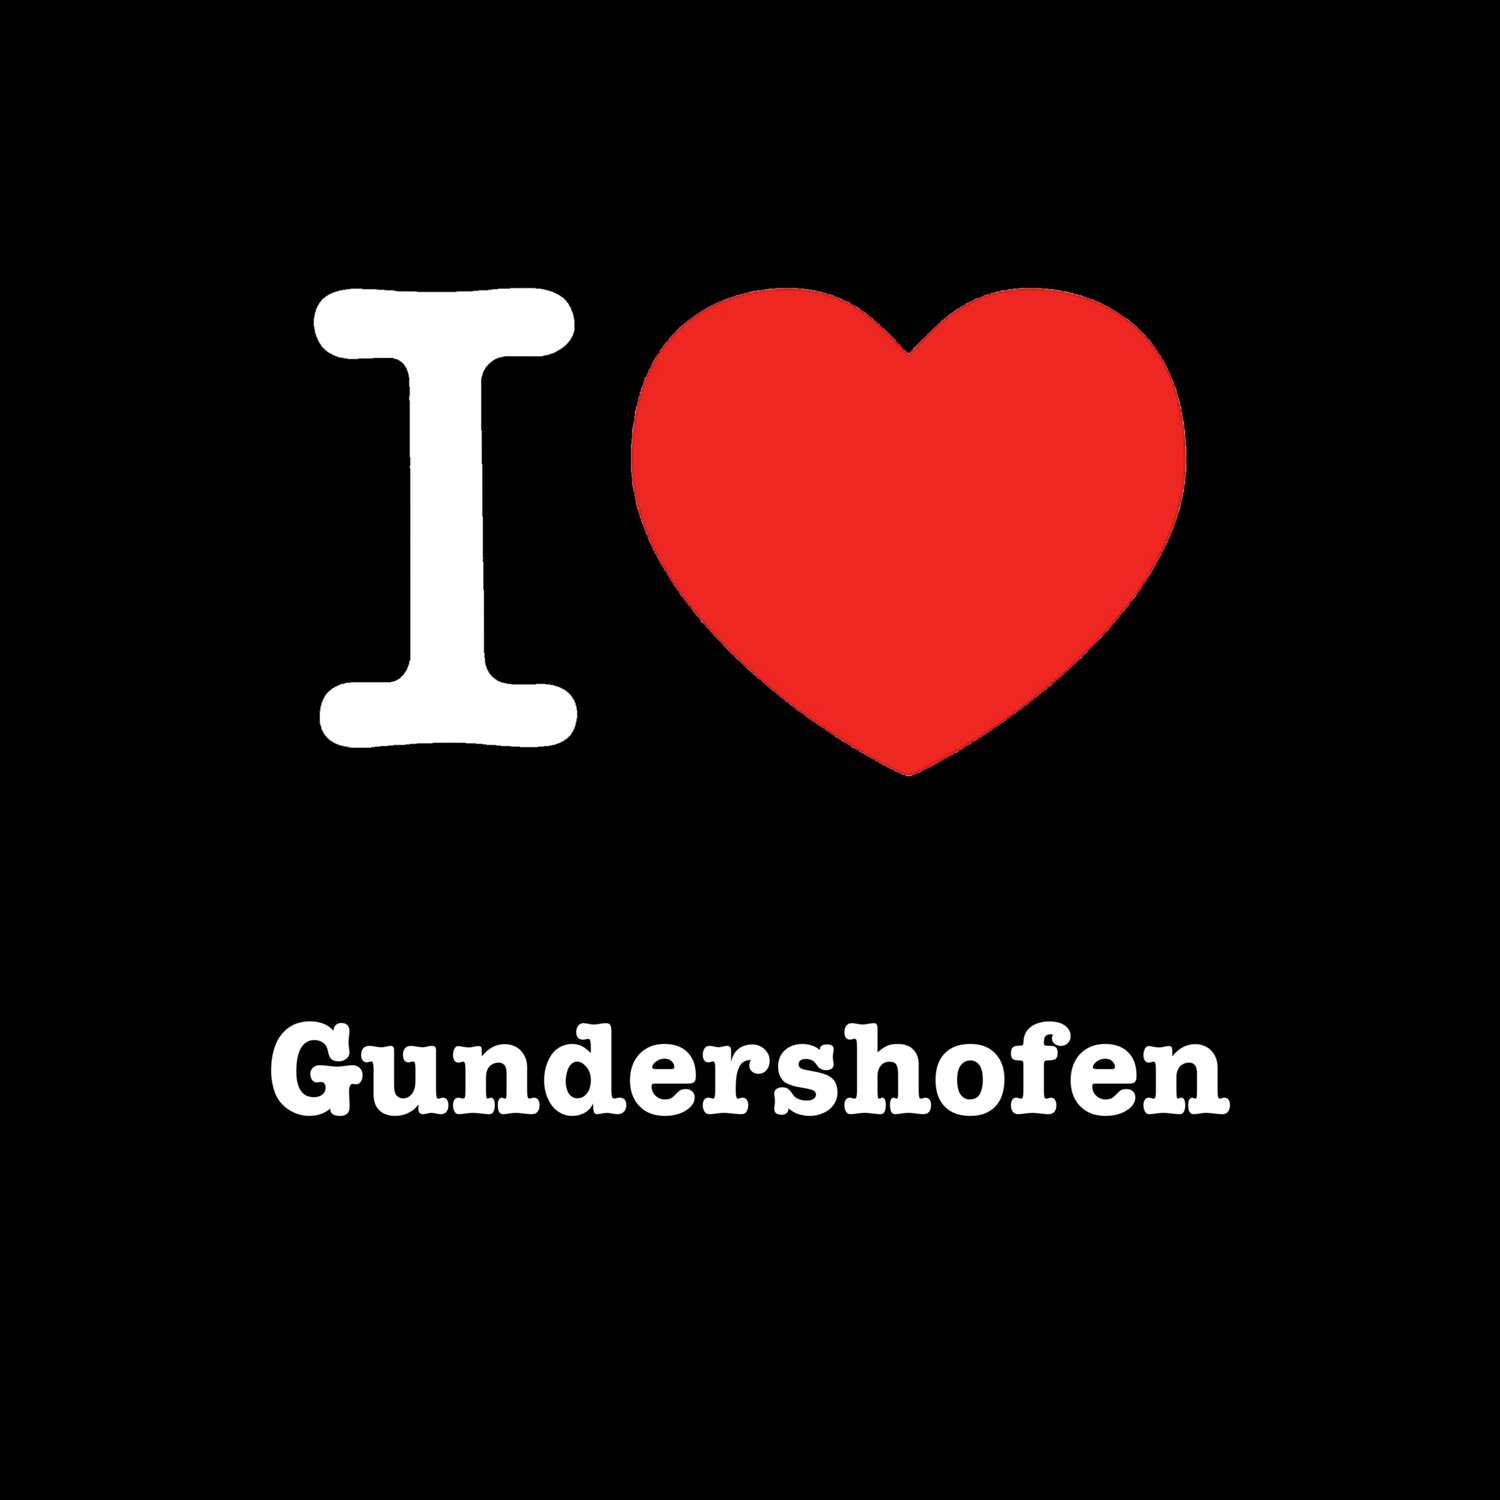 Gundershofen T-Shirt »I love«